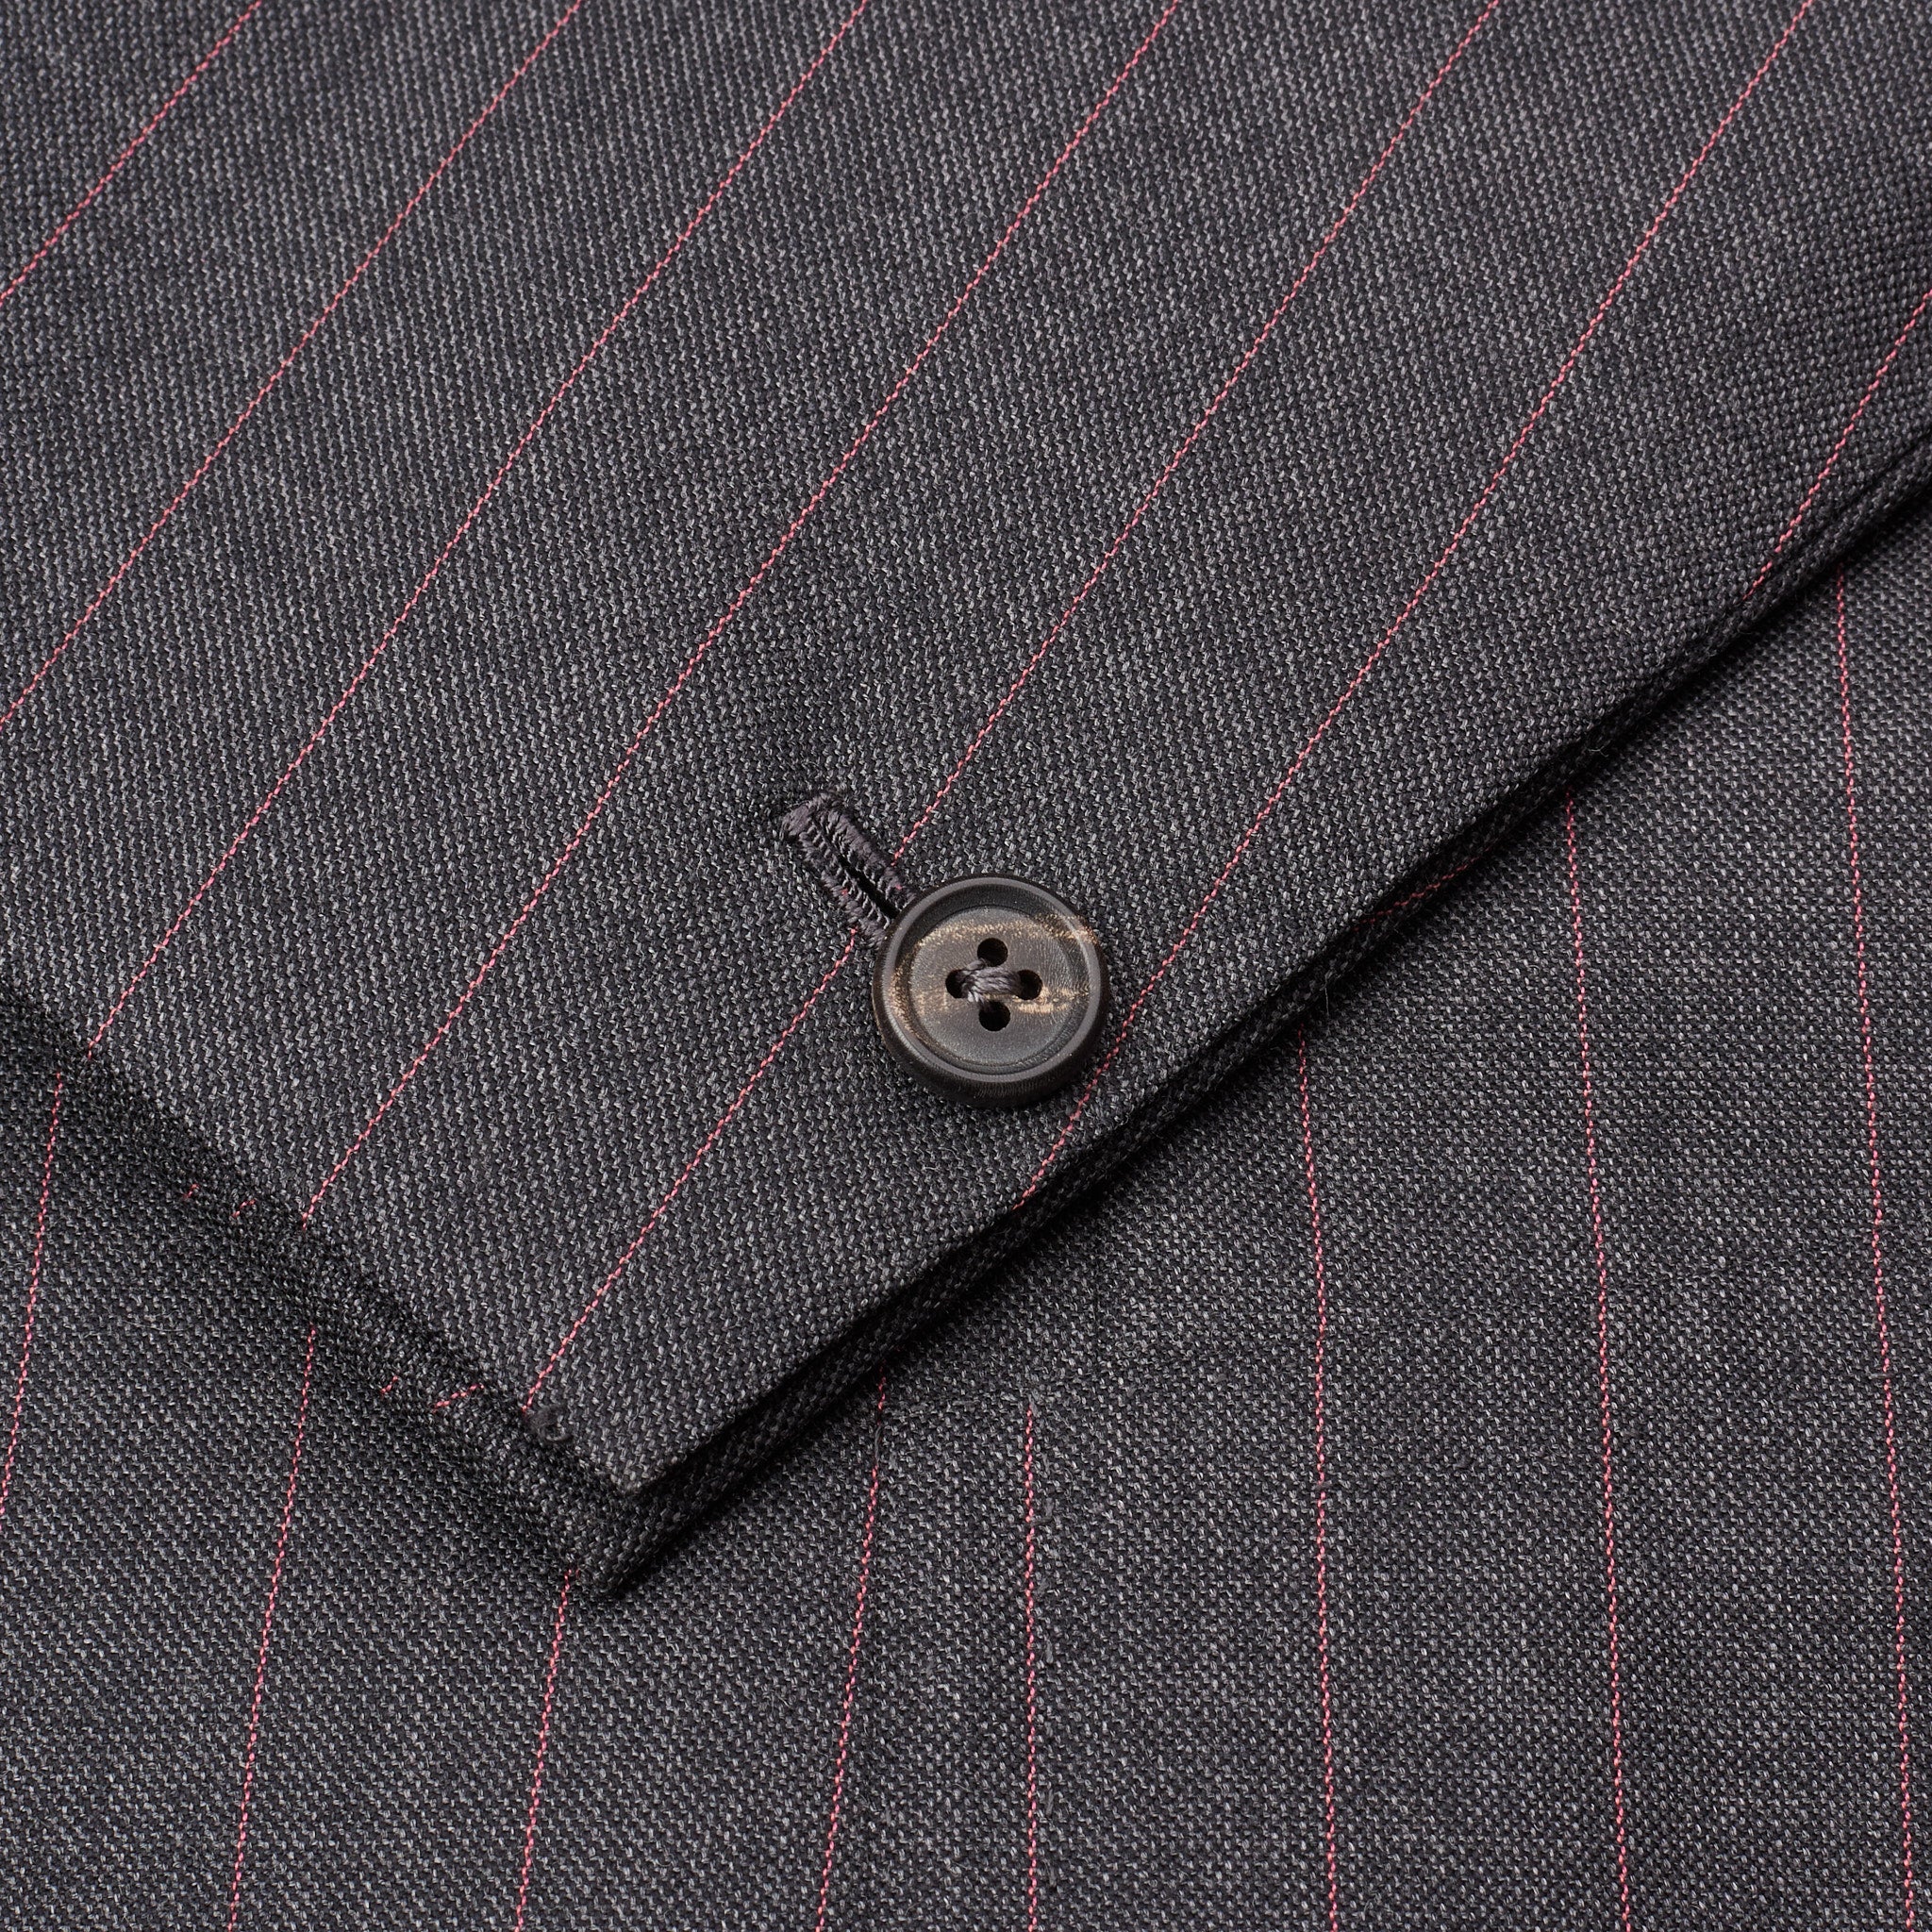 Sartoria CHIAIA Napoli Handmade Bespoke Gray Striped Wool Suit EU 50 NEW US 40 SARTORIA CHIAIA